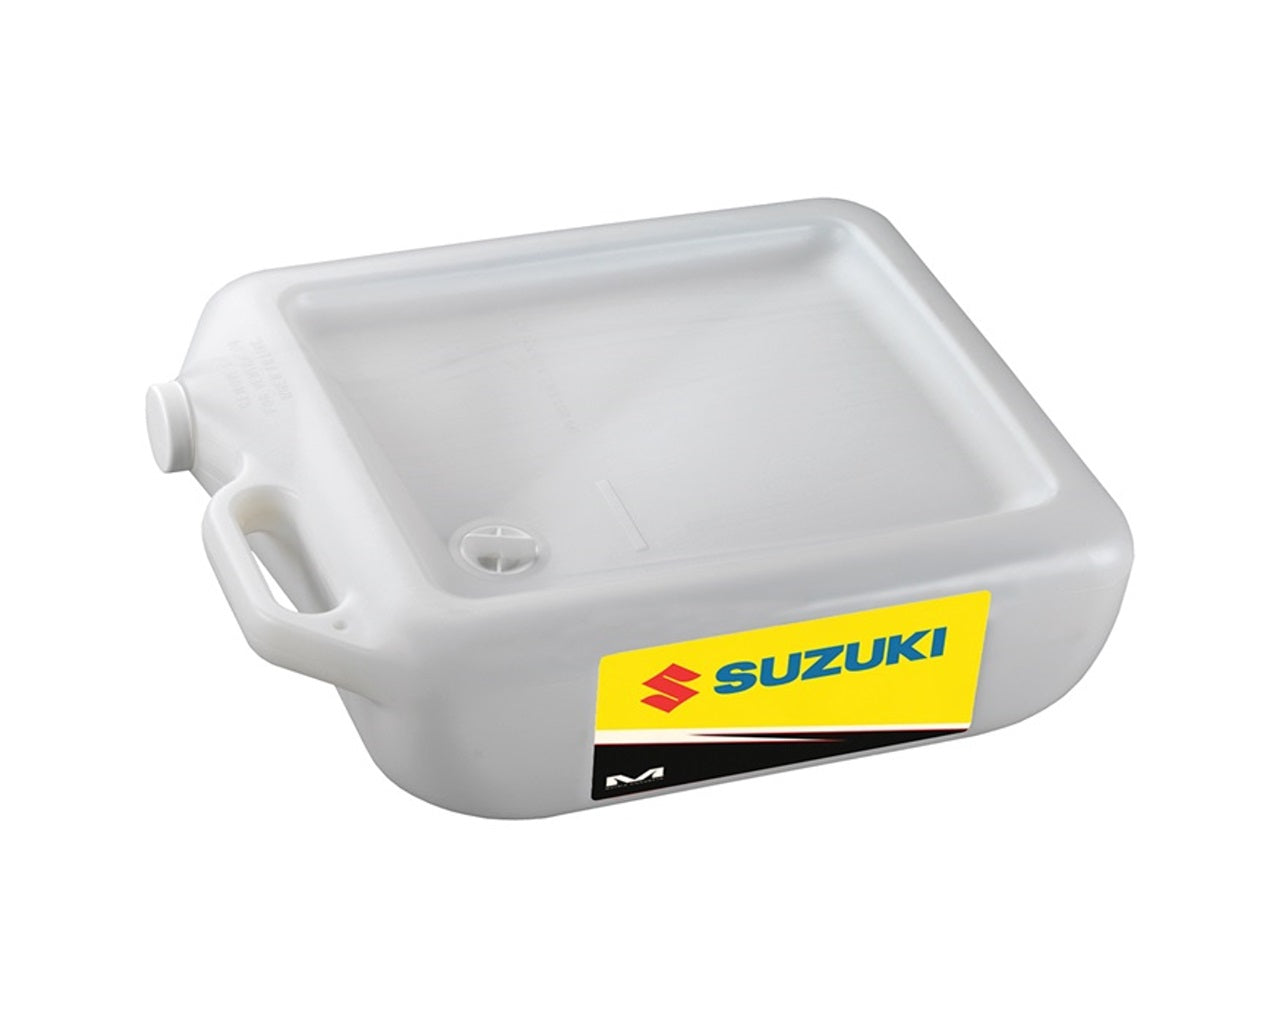 Suzuki M21 Oil Drain Waste Container  6 quarts 990A0-99130